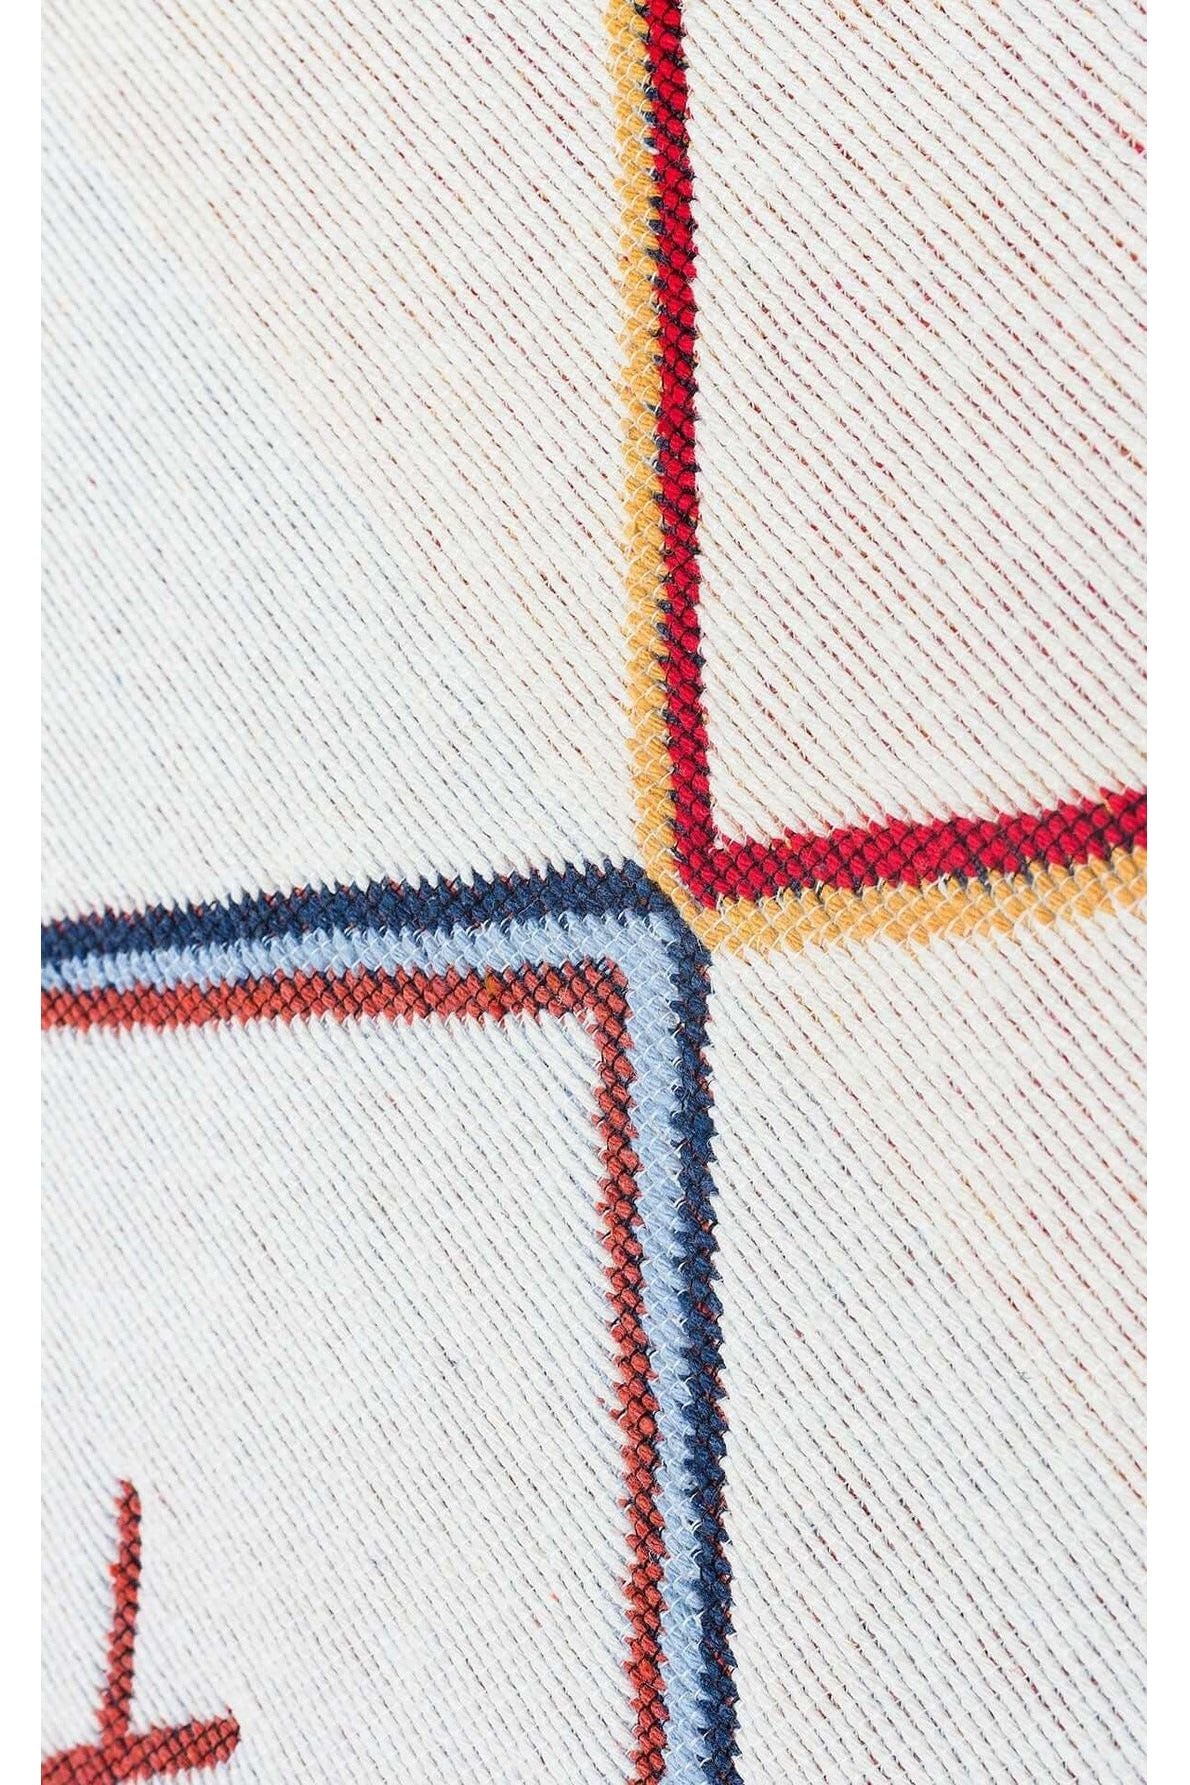 #Turkish_Carpets_Rugs# #Modern_Carpets# #Abrash_Carpets#Ar 21 Multy